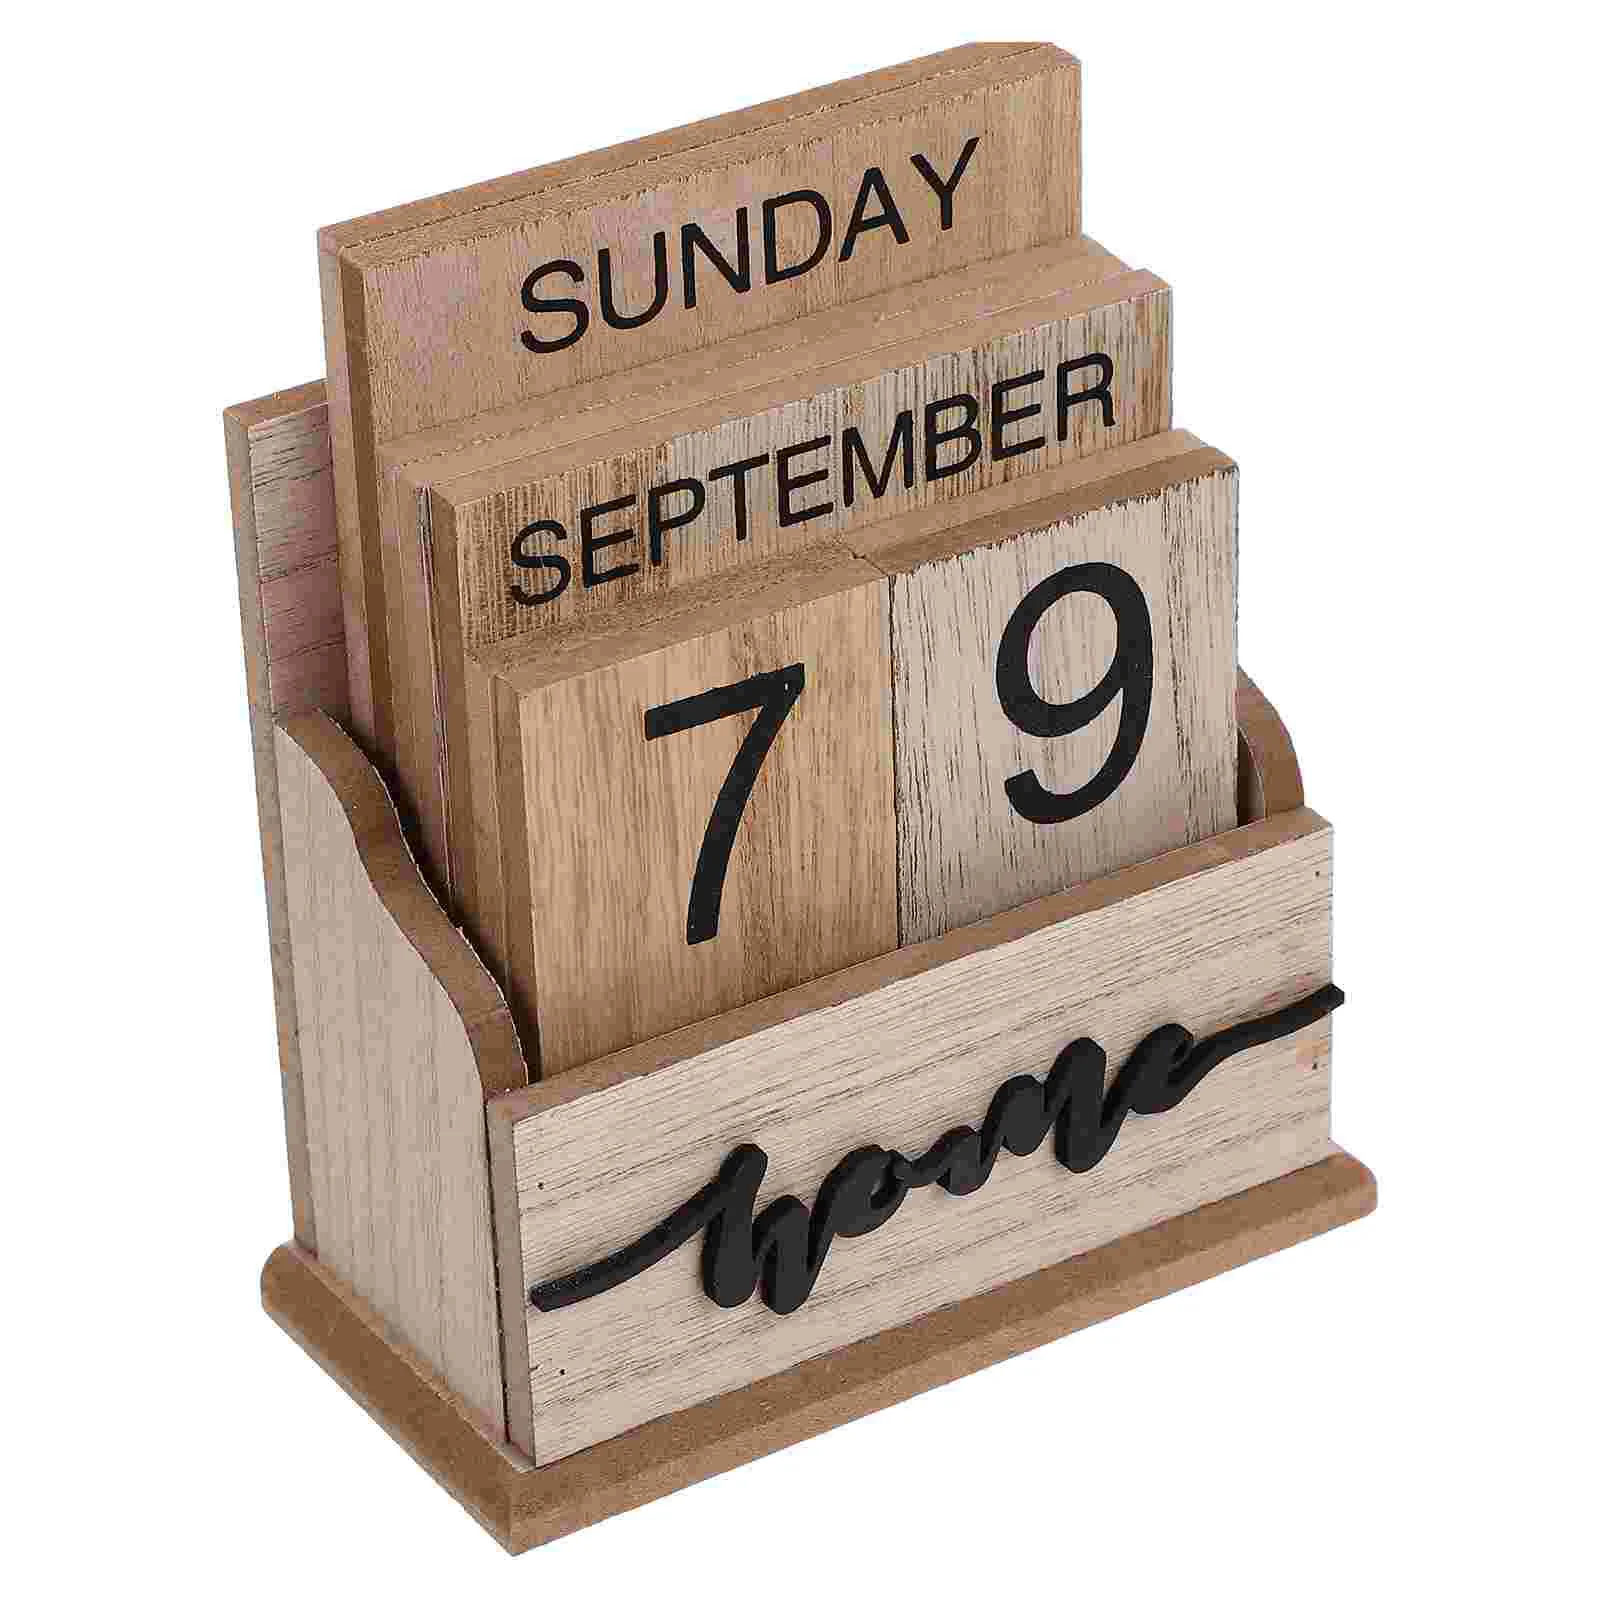 

Calendar Wood Table Decor Accessory Christmas Tabletop Simple Ornament Desktop Adorable Month Date Display Vintage Office